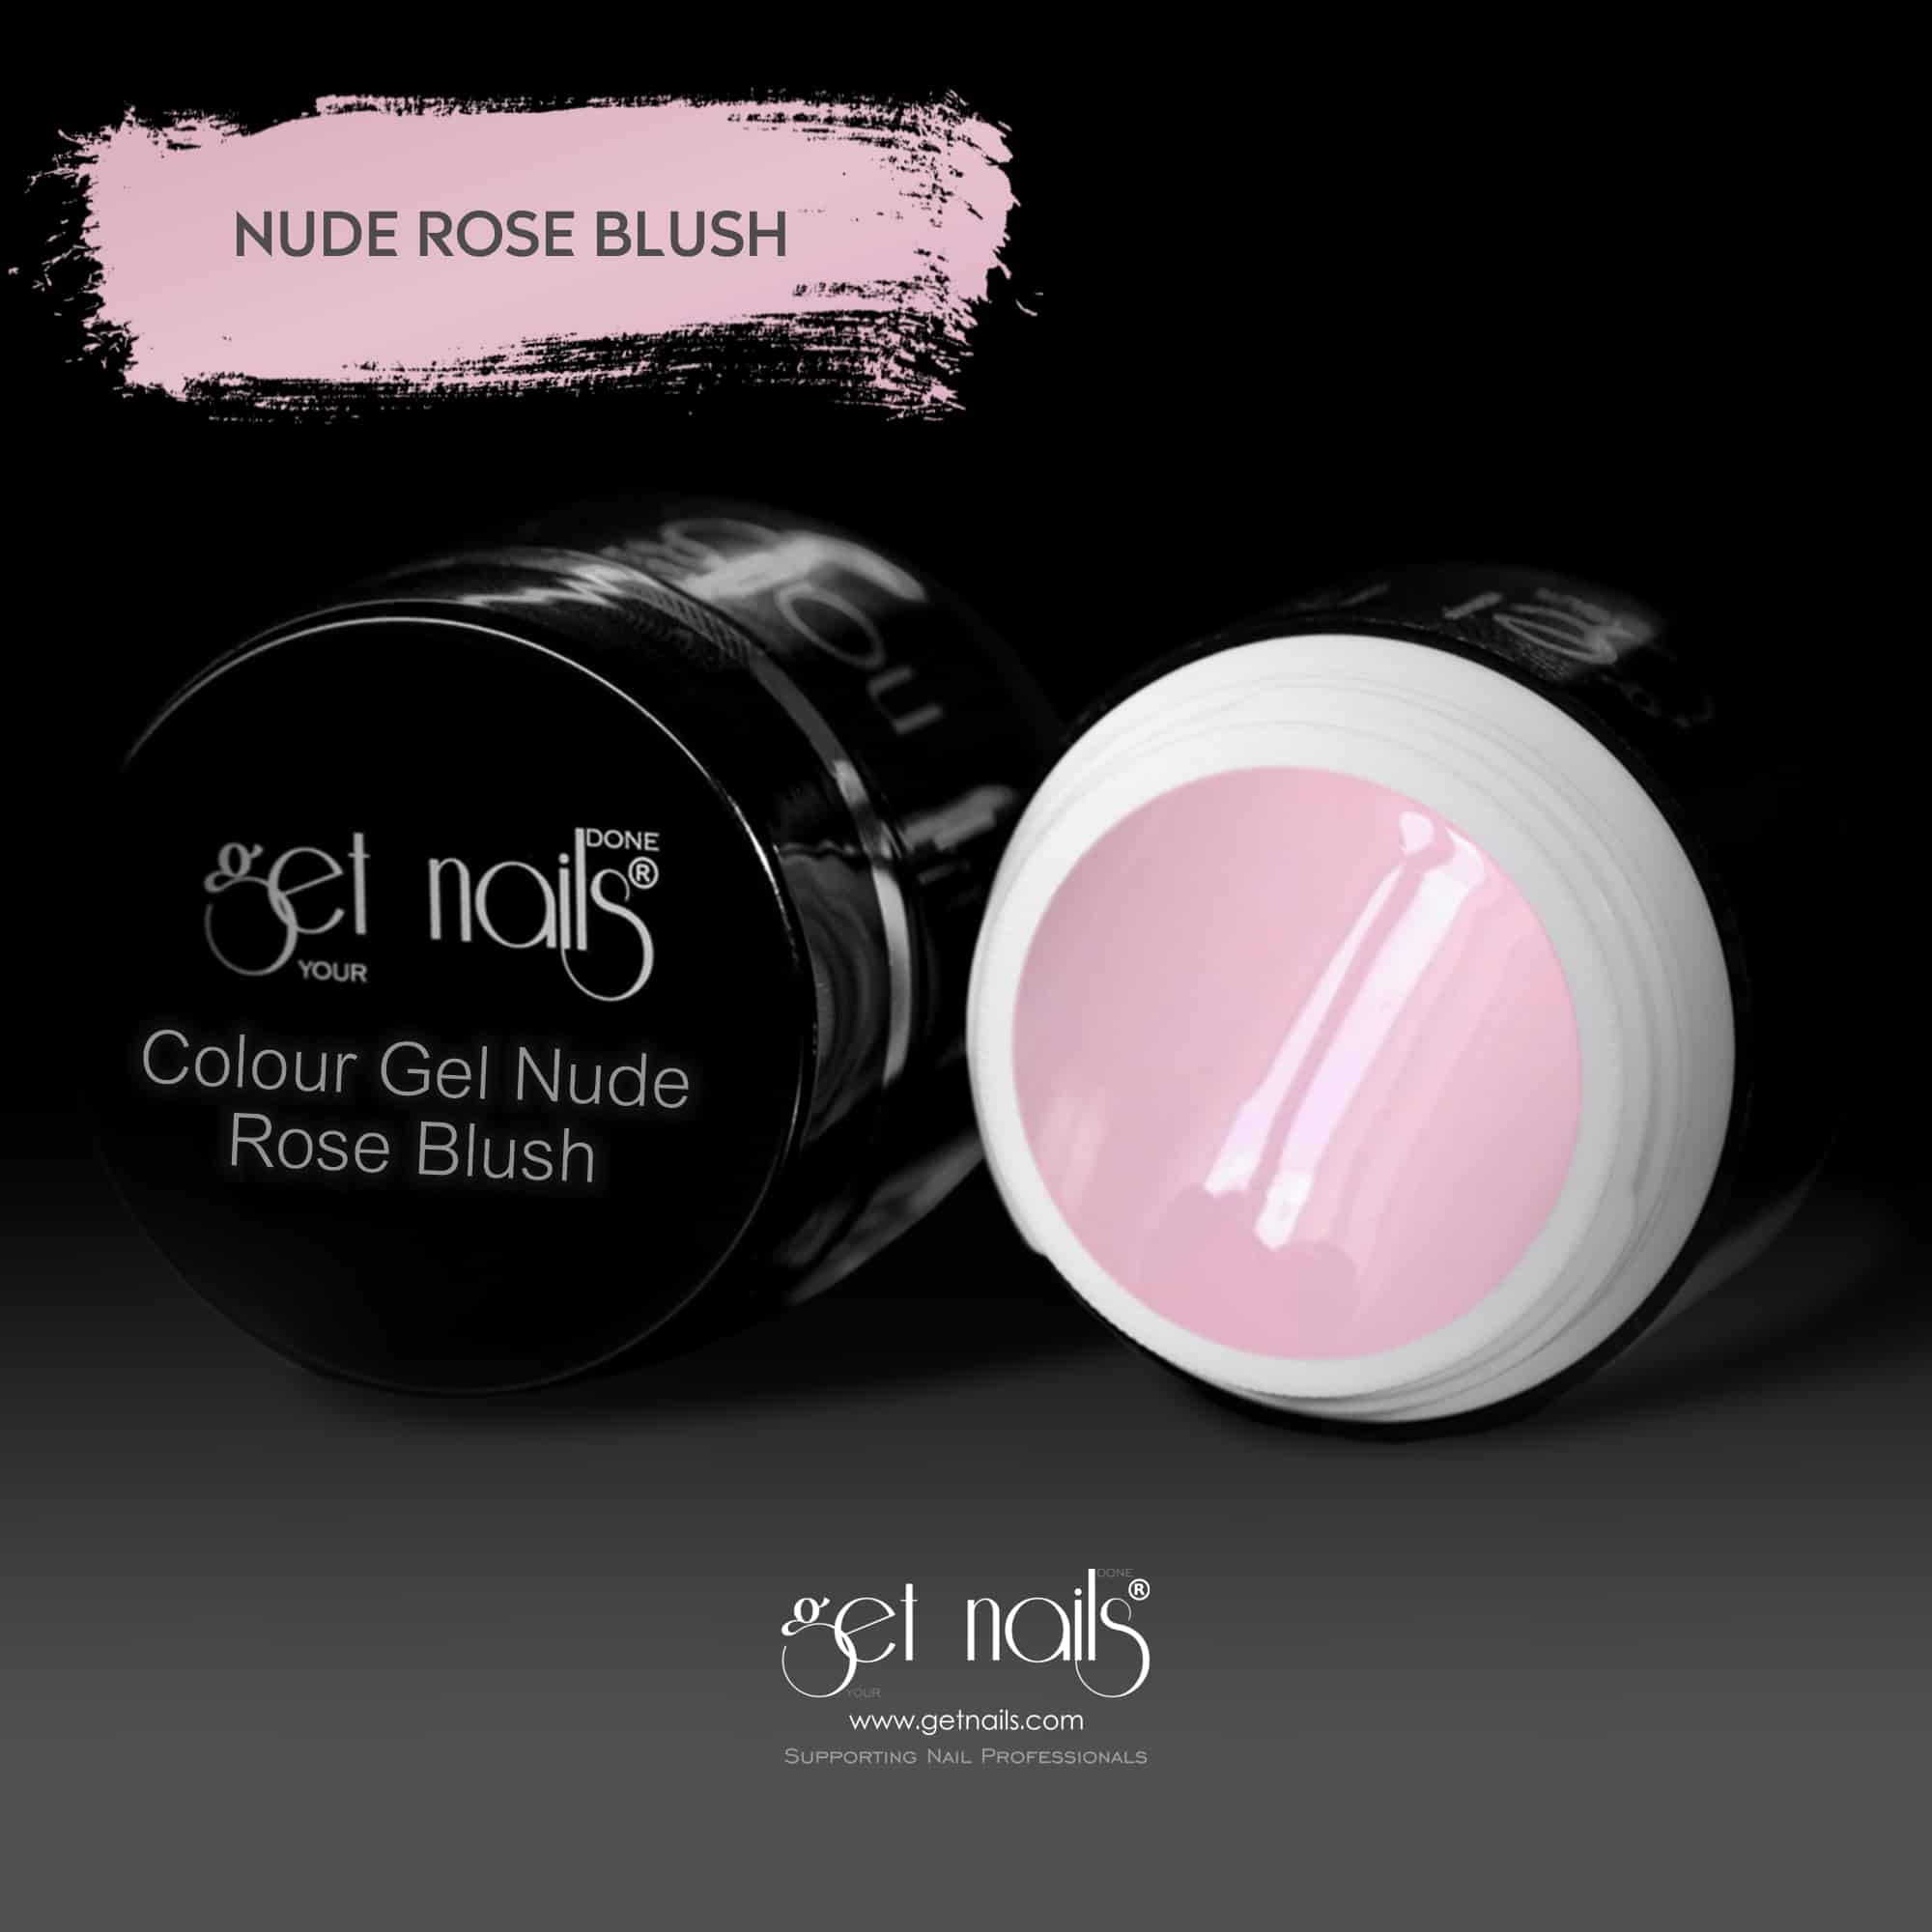 Get Nails Austria - Gel colorato Nude Rose Blush 5g